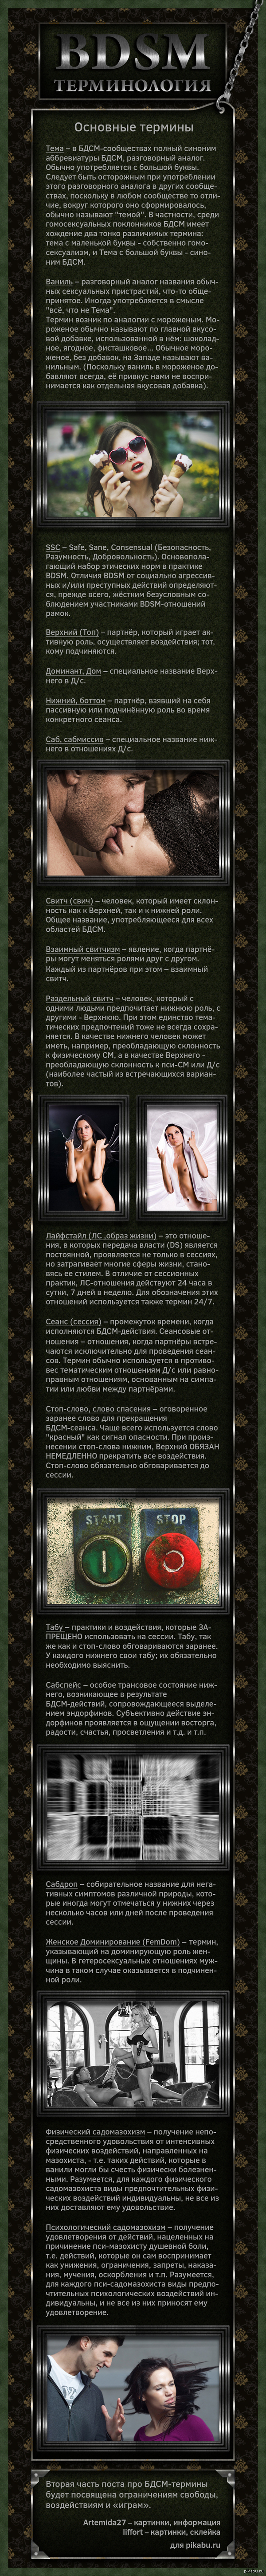 BDSM - a bit of theory. - Informative, NSFW, My, BDSM, Longpost, Terms